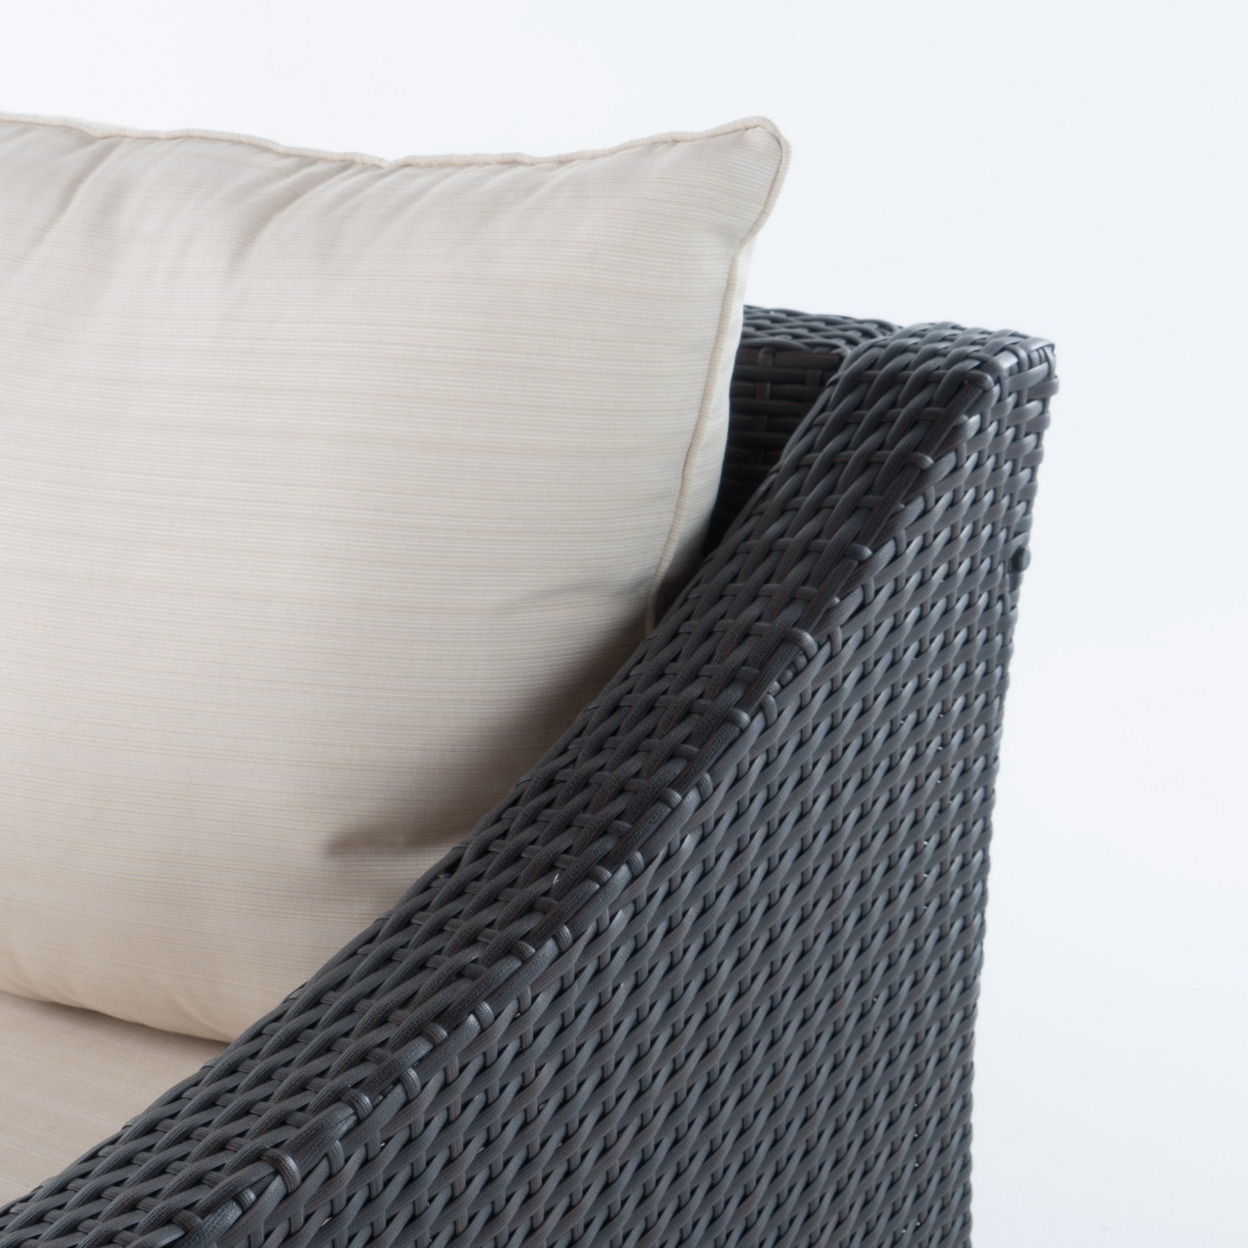 Aspen Outdoor Wicker Loveseat & Table WithWater Resistant Fabric Cushions - Beige, Multibrown Wicker